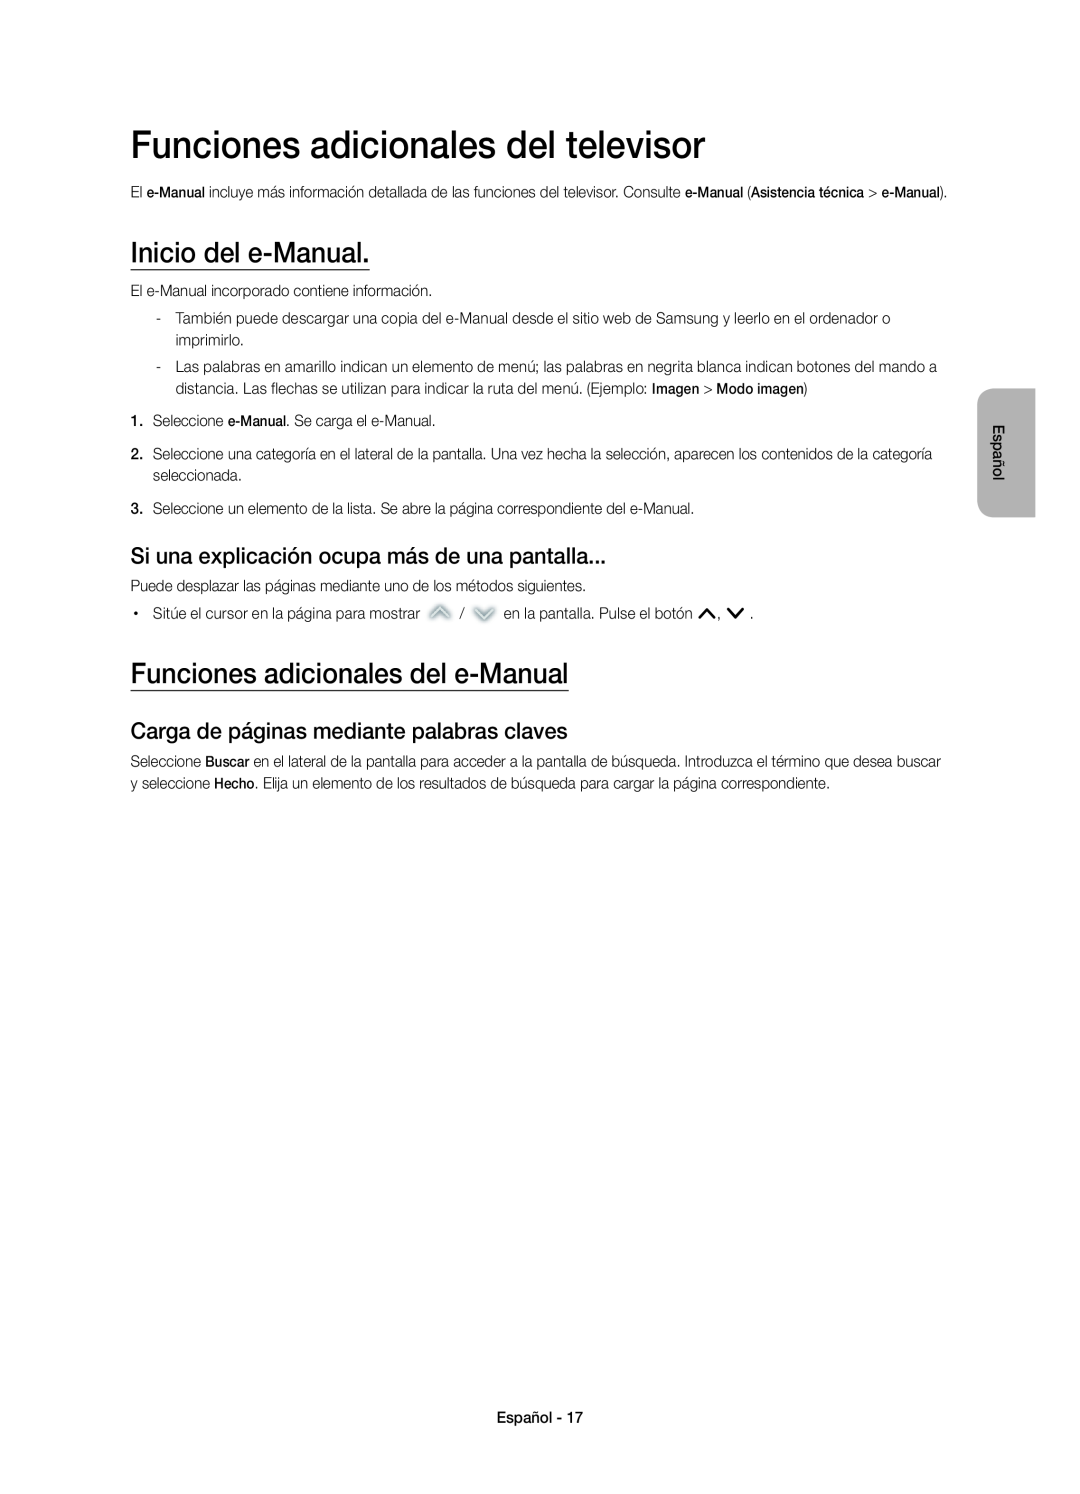 Samsung UE32H6410SSXXC manual Funciones adicionales del televisor, Inicio del e-Manual, Funciones adicionales del e-Manual 